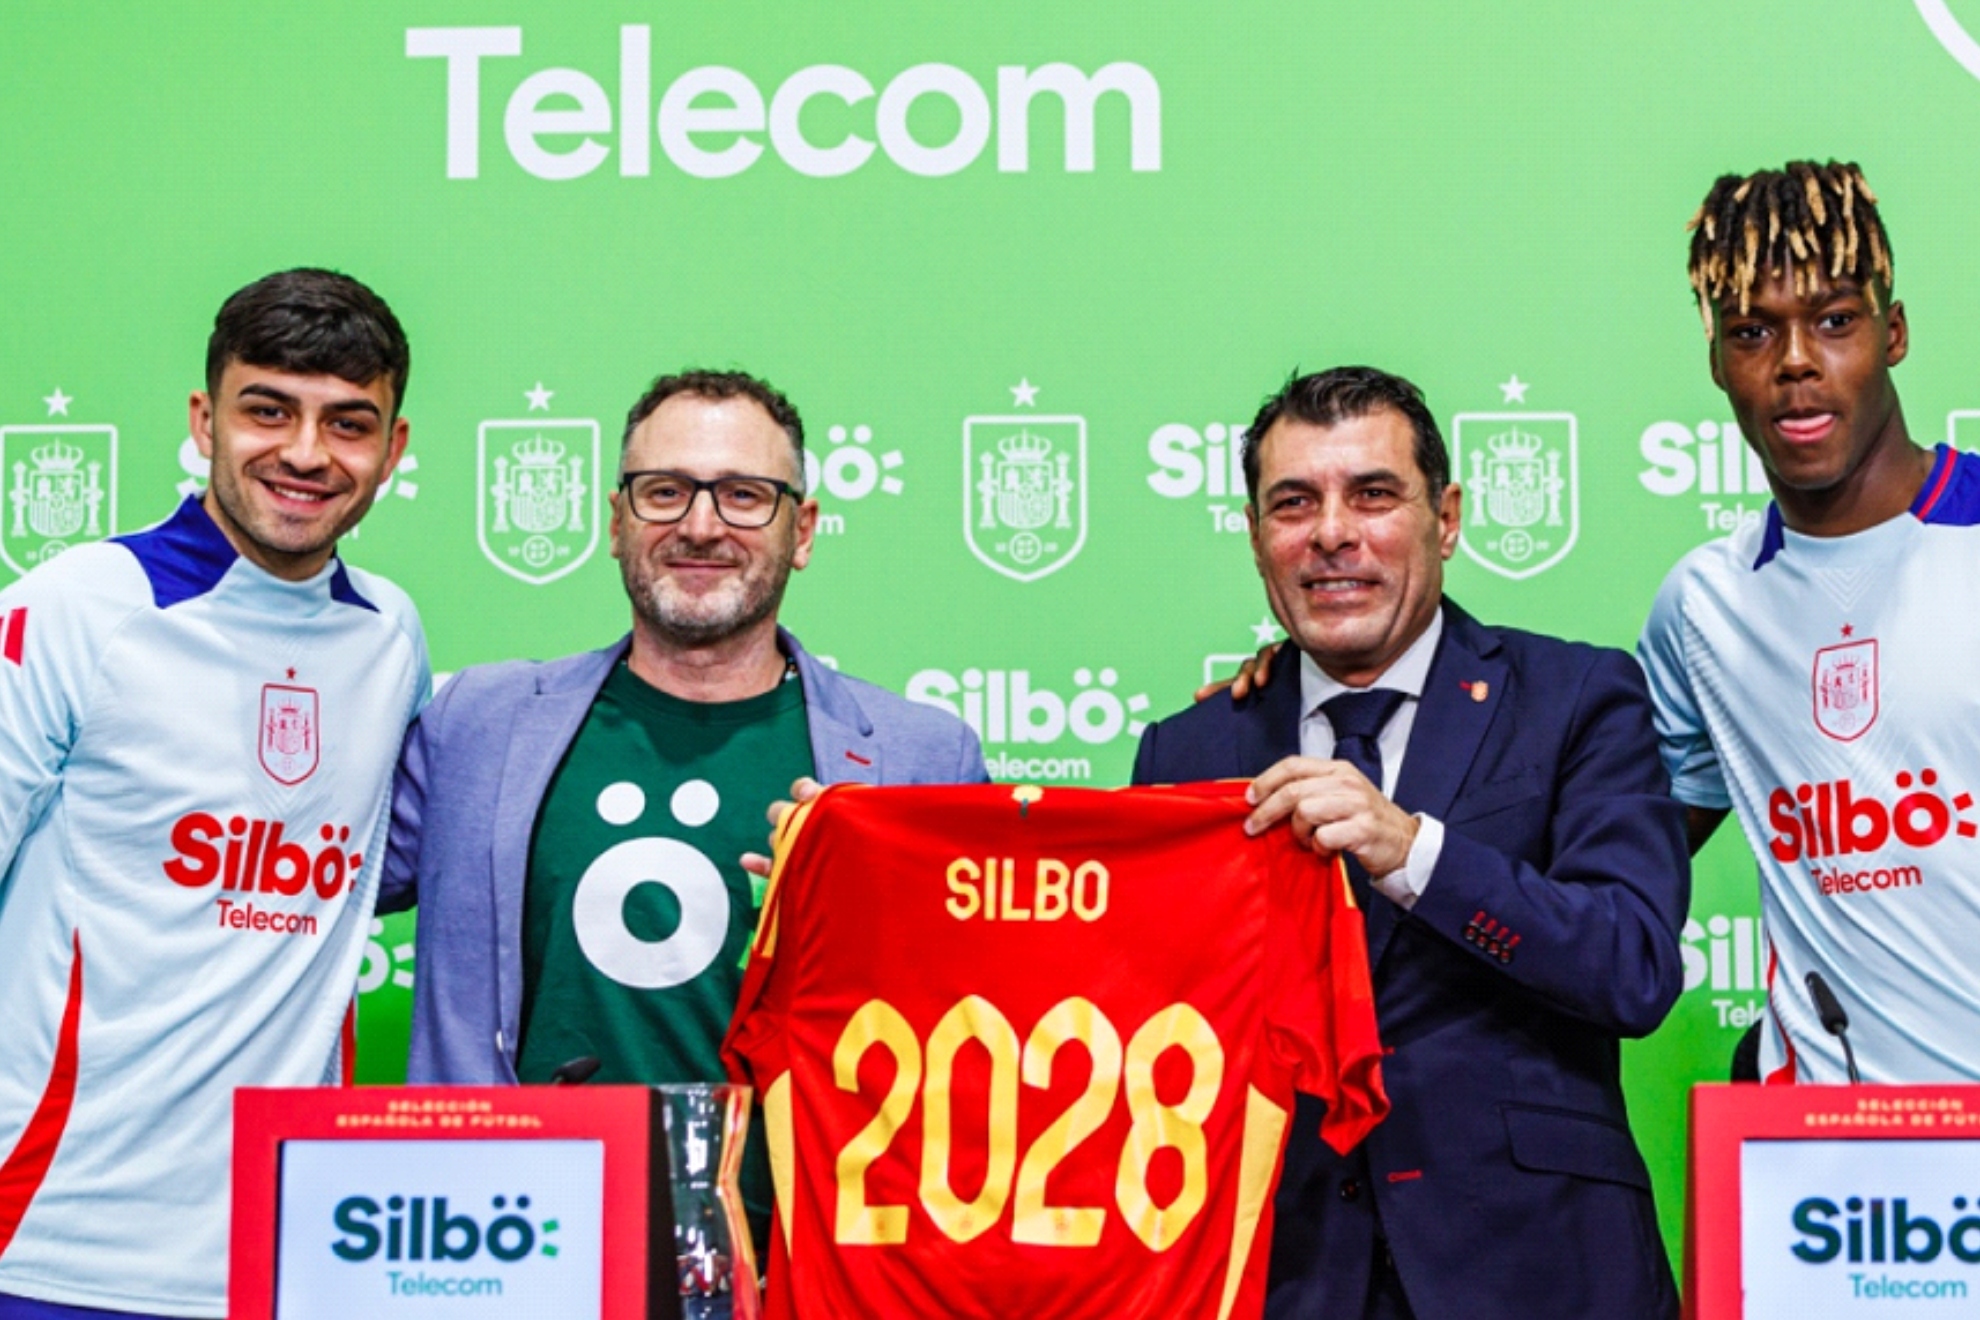 Silb� Telecom ser� patrocinador oficial de la Selecci�n Espa�ola de f�tbol masculina y femenina